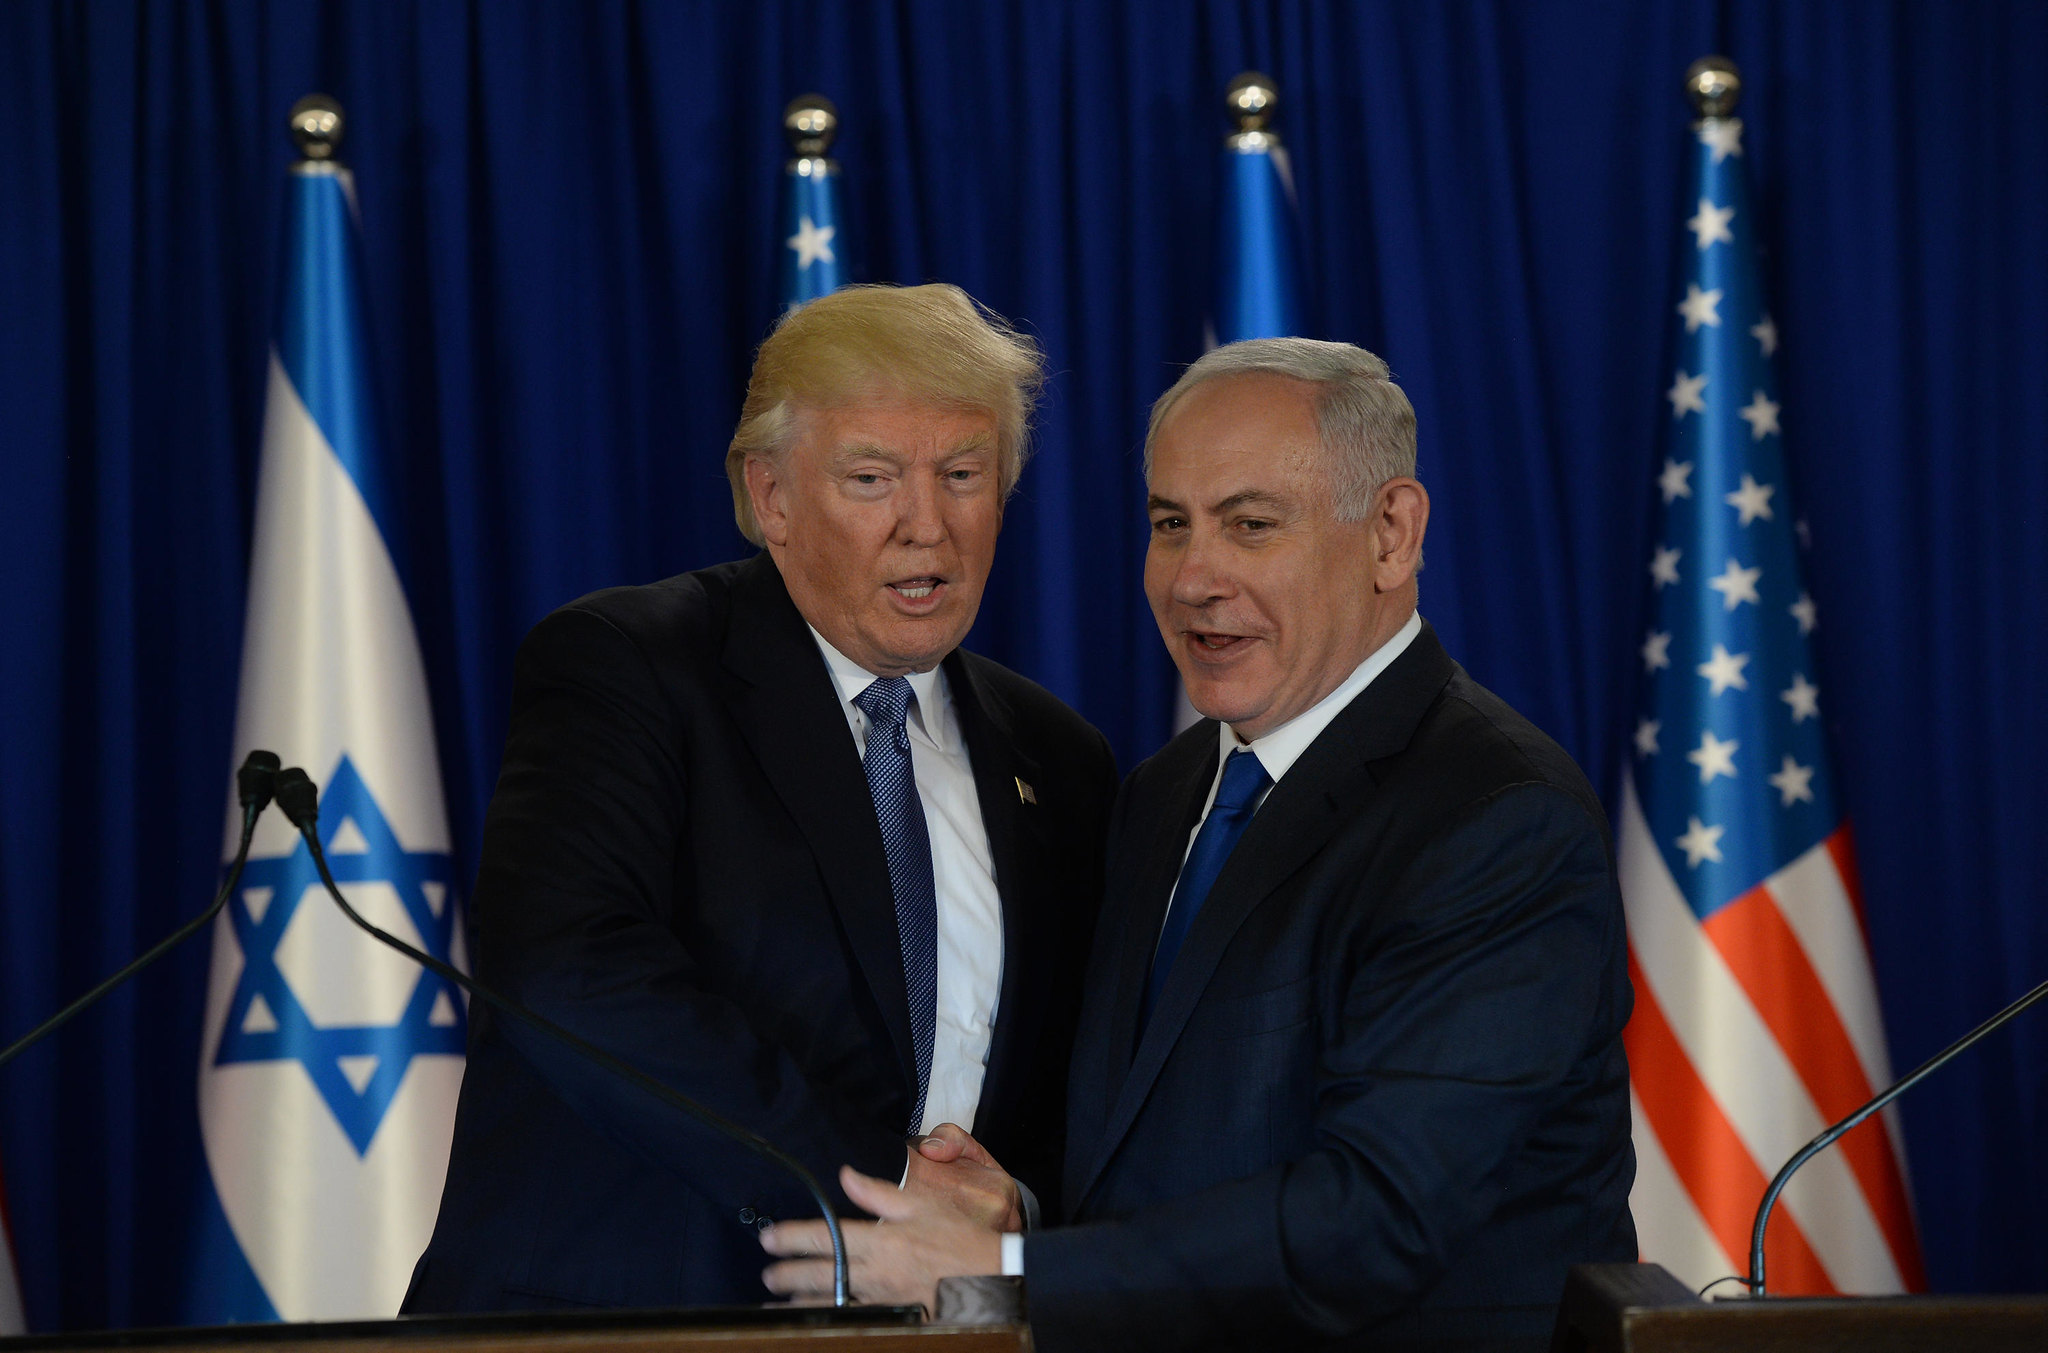 President Donald Trump and Israeli Prime Minister Benjamin Netanyahu.